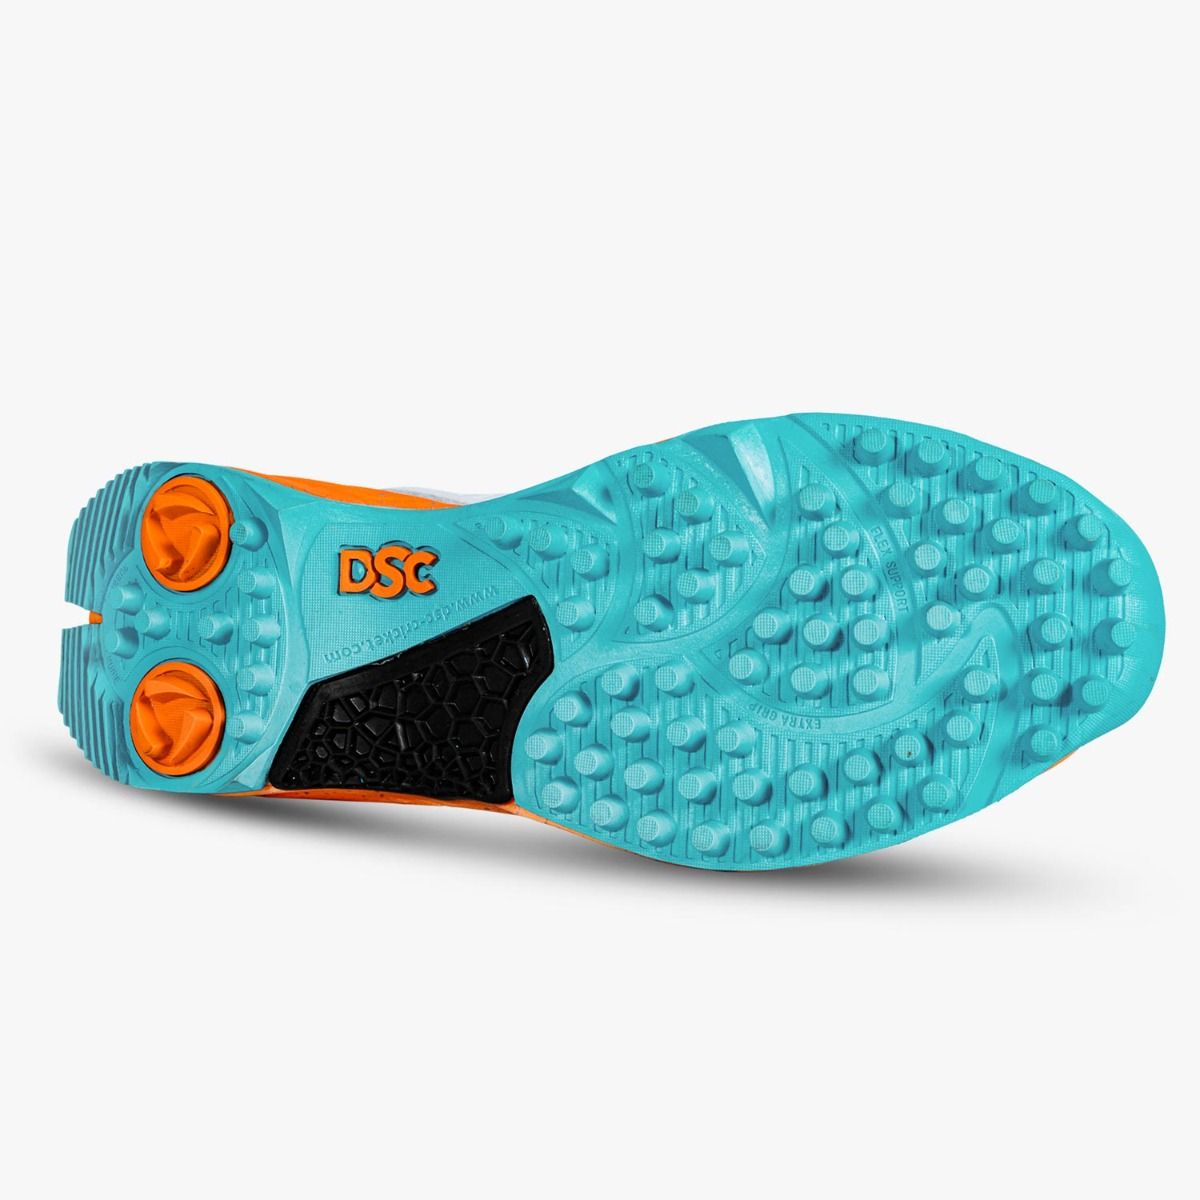 DSC Jaffa 22 Cricket Shoes (White/Blue/Orange)